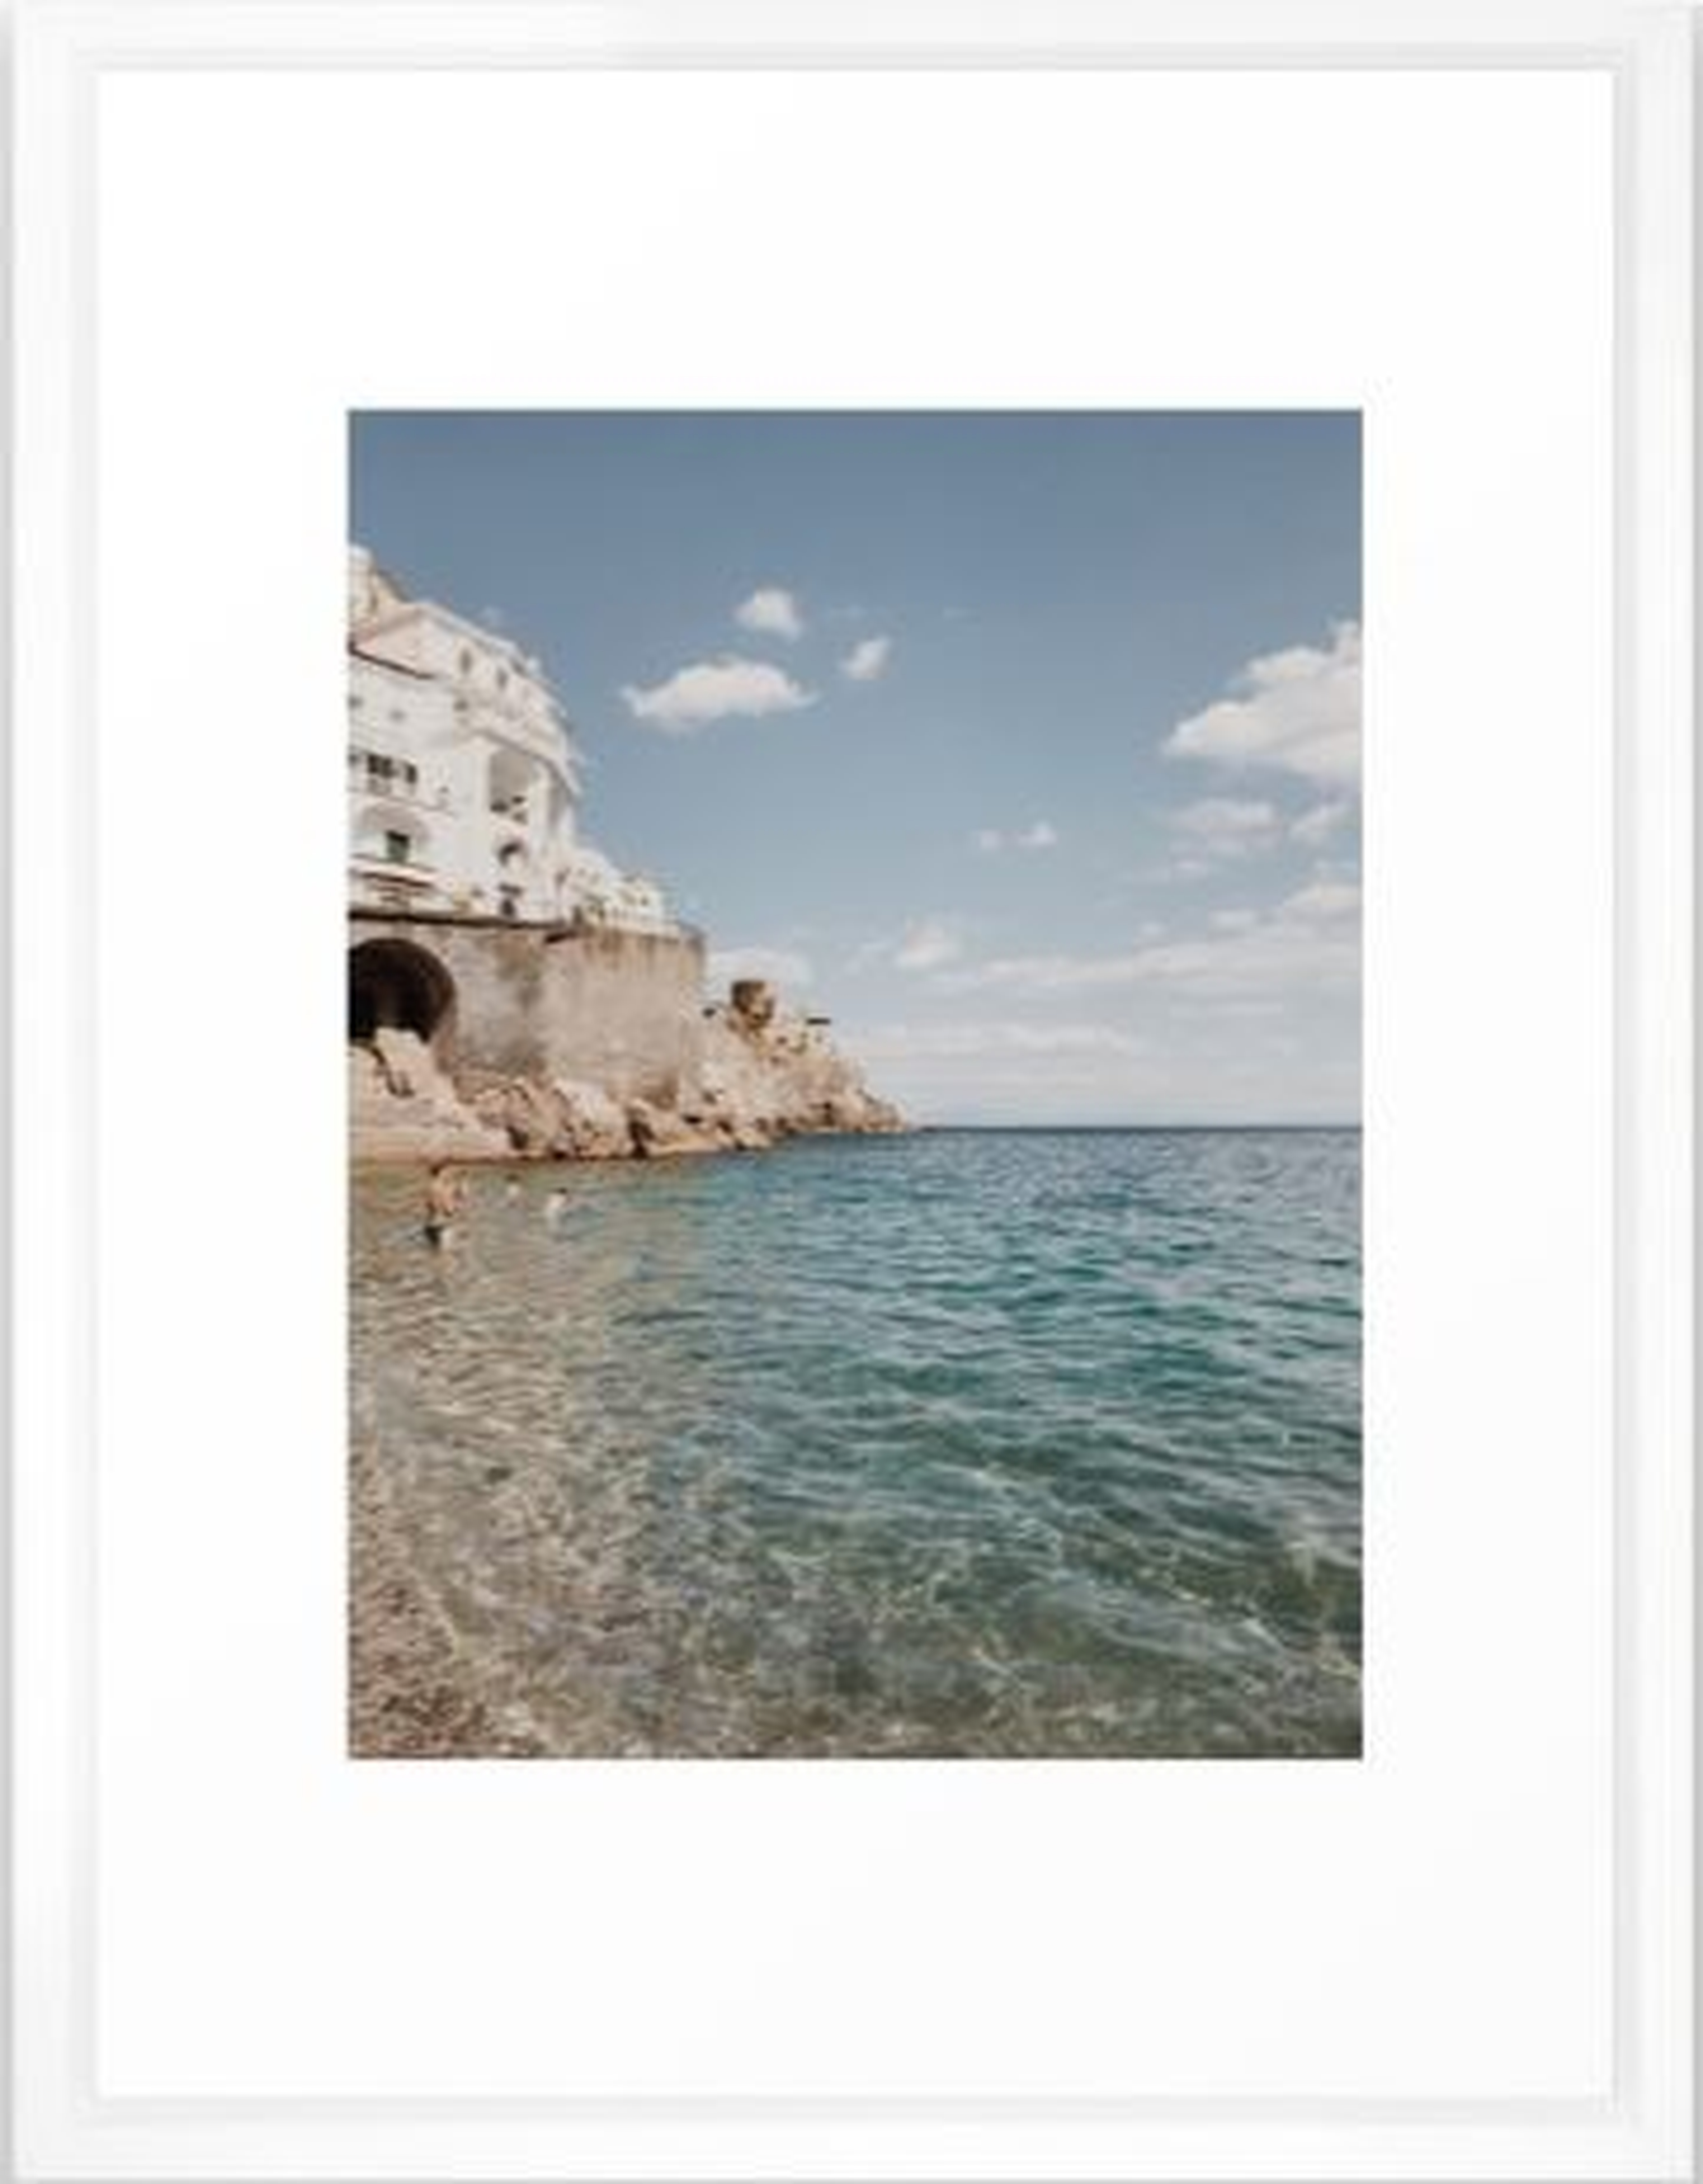 Amalfi Coast Framed Art Print - Society6